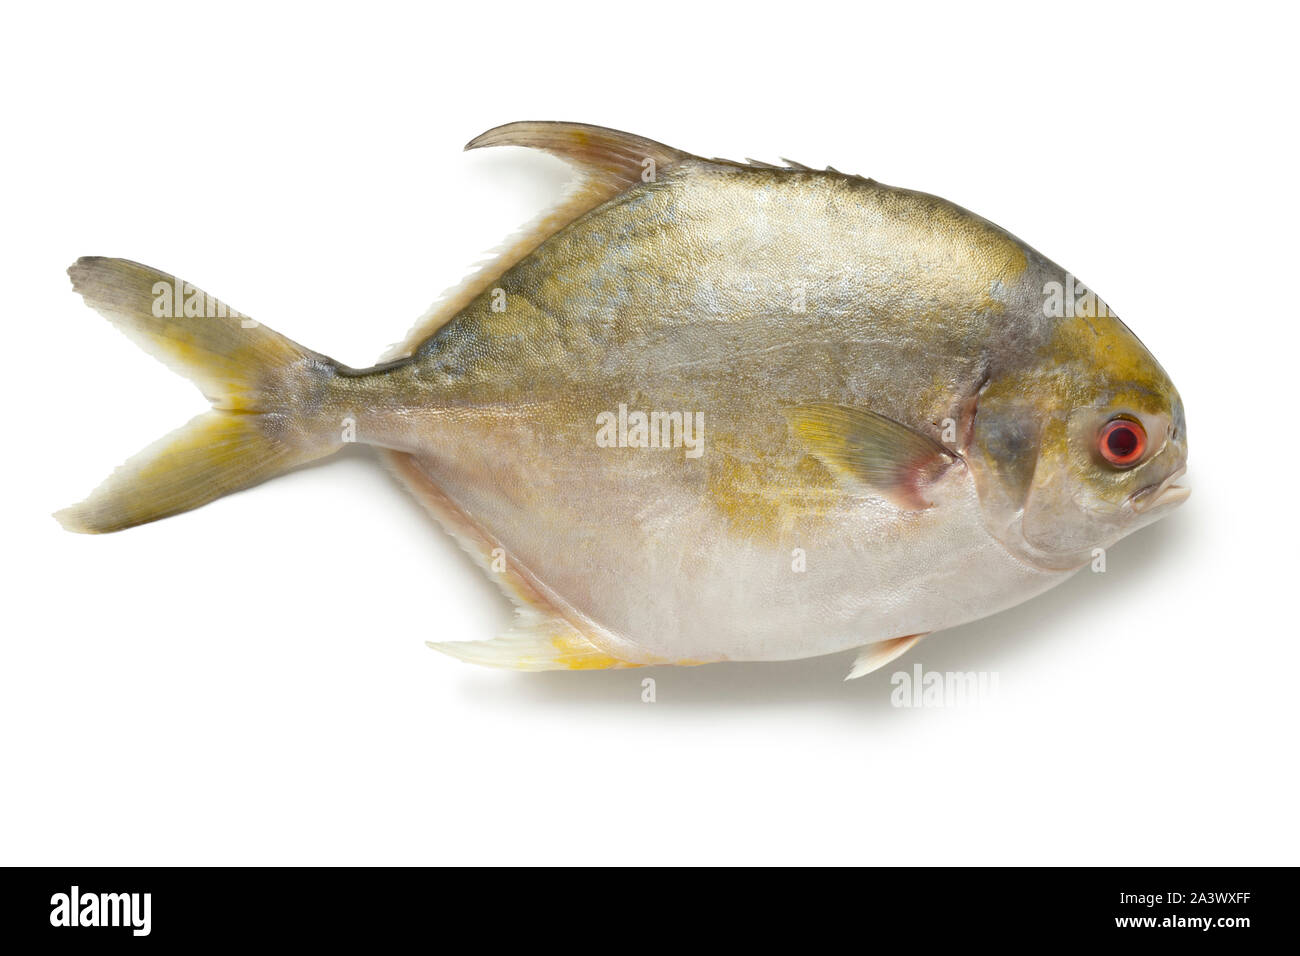 Unico crudo fresco golden pomfret pesce o i pesci castagna pesce isolato su sfondo bianco Foto Stock